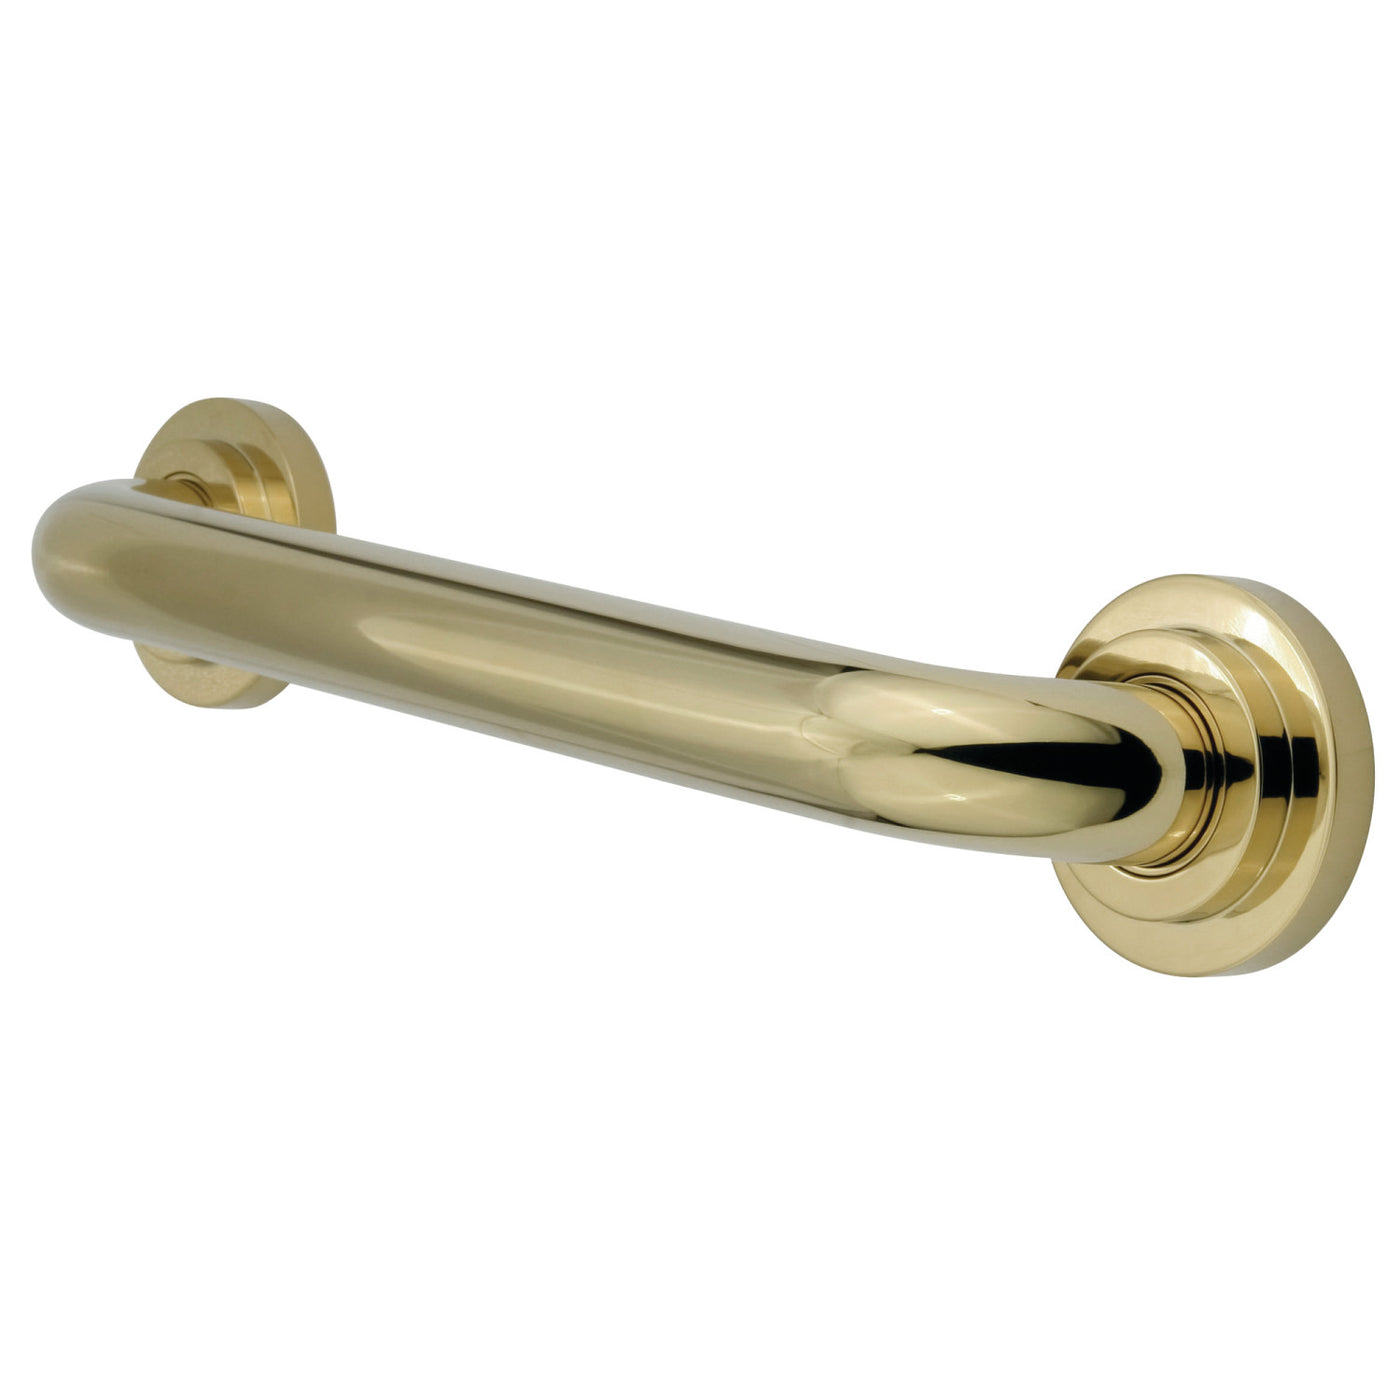 Elements of Design EDR414322 32-Inch X 1-1/4-Inch OD Grab Bar, Polished Brass